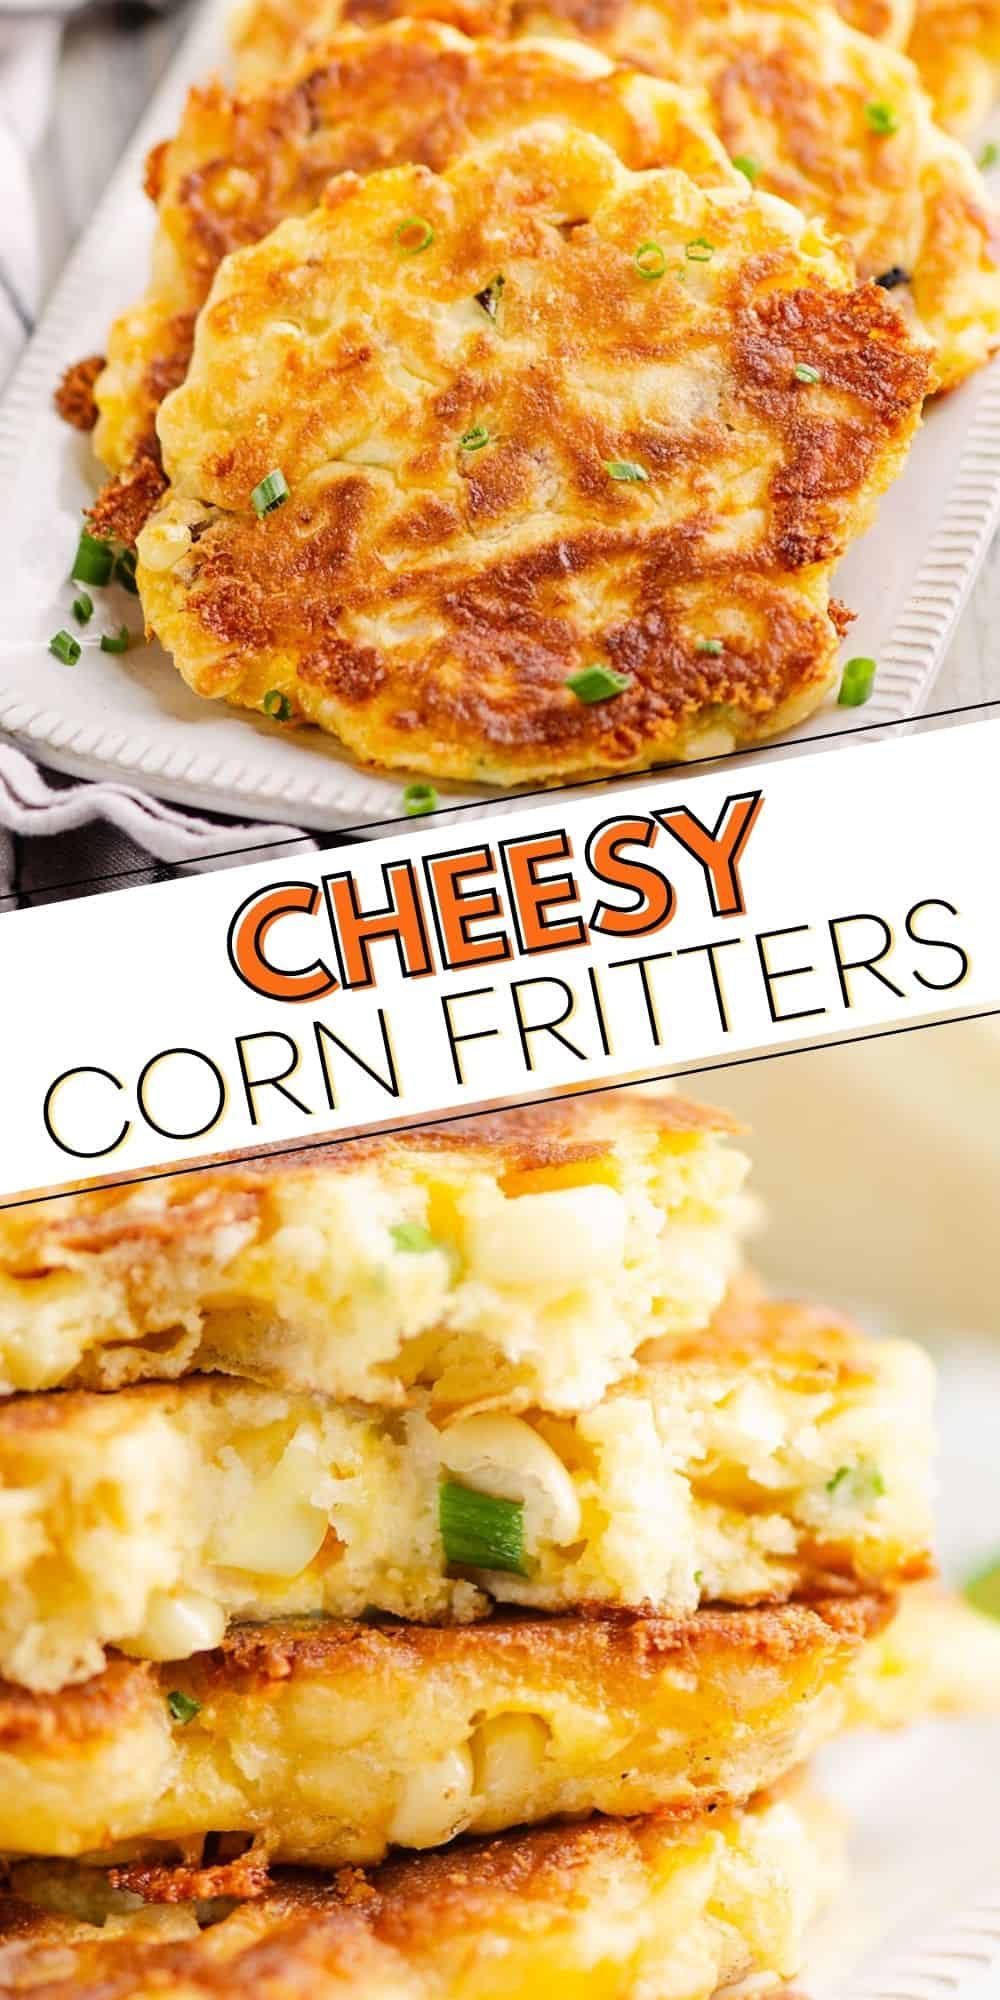 Cheesy Corn Fritters